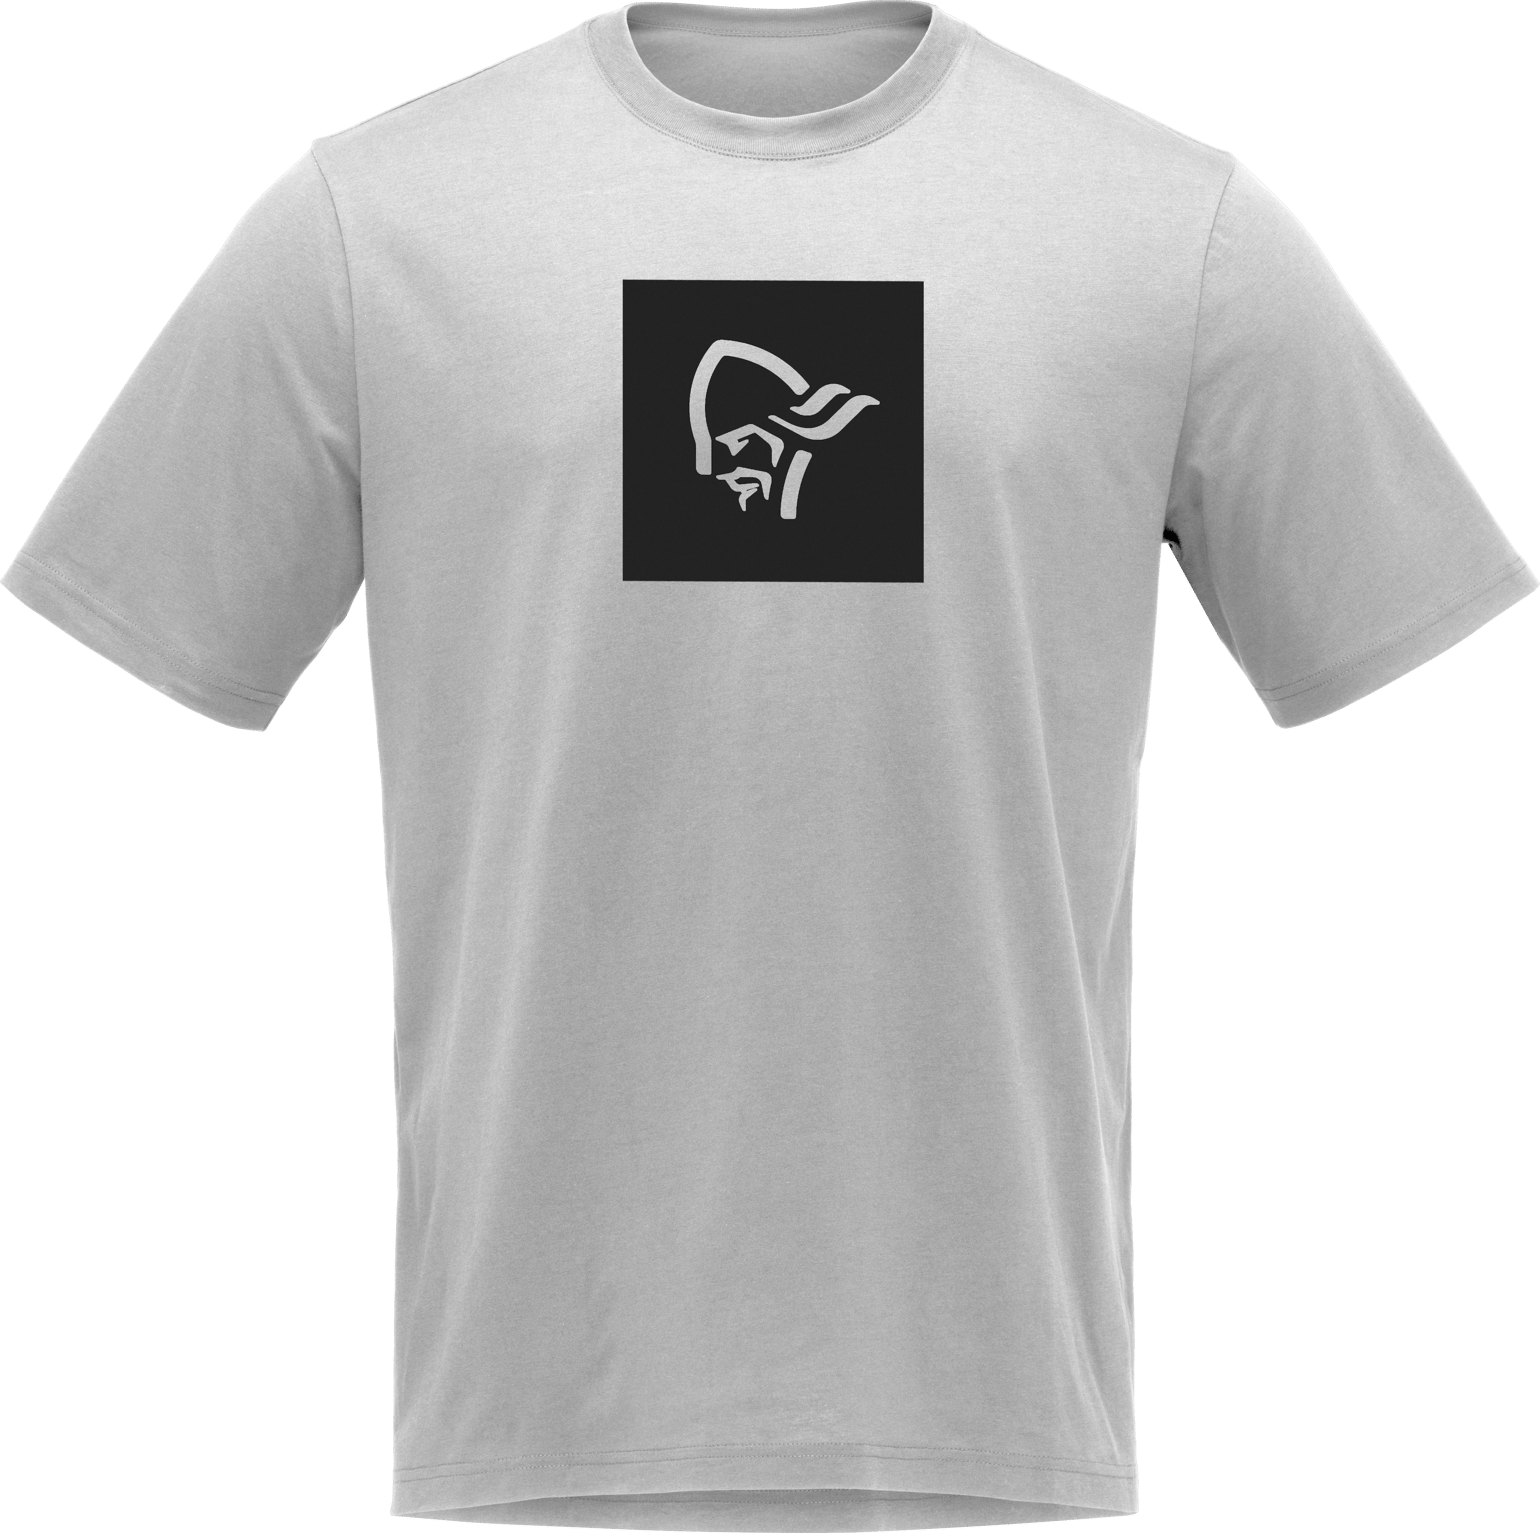 Men's /29 Cotton Square Viking T-Shirt Drizzle Melange